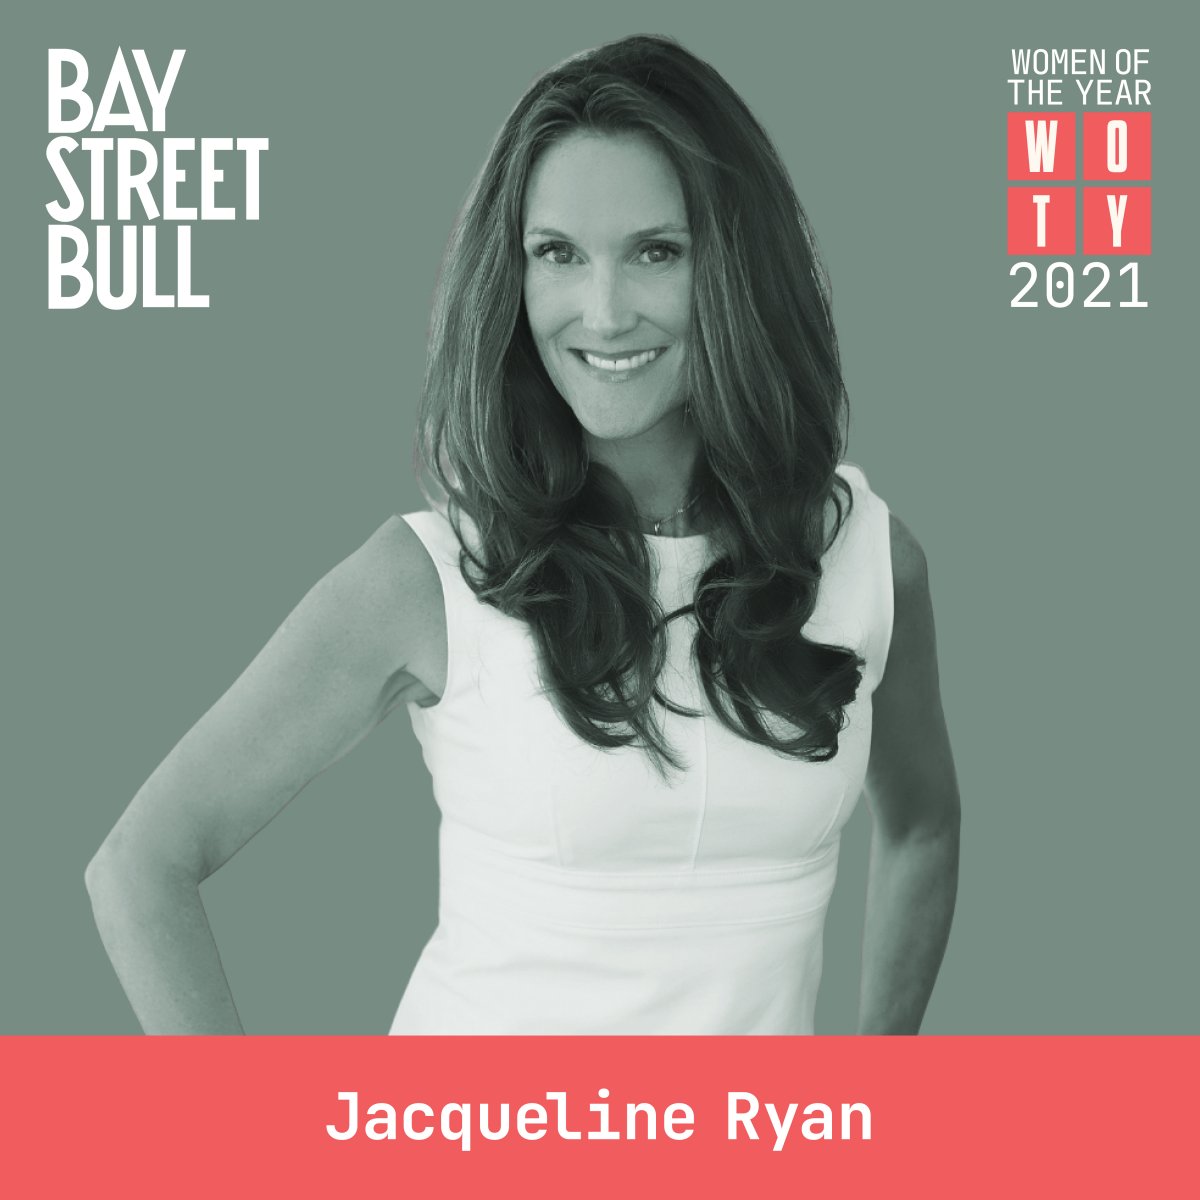 Jacqueline Ryan smiling in white top